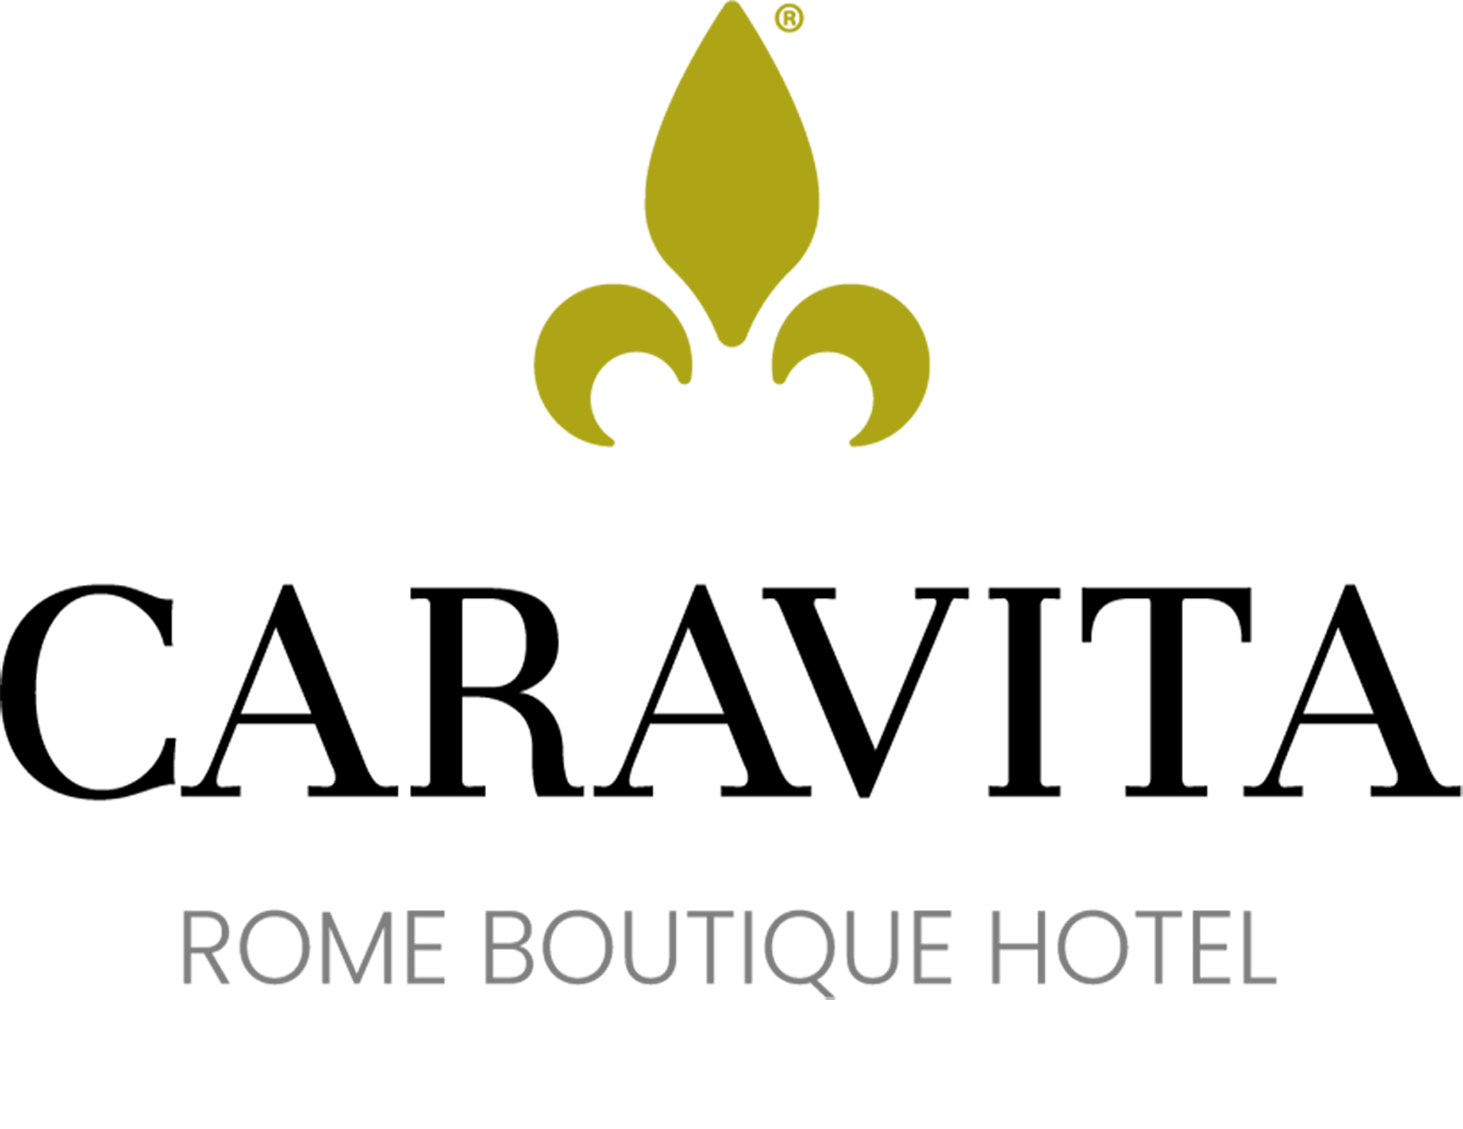 roma-luxus-hotel-logo-indirizzo